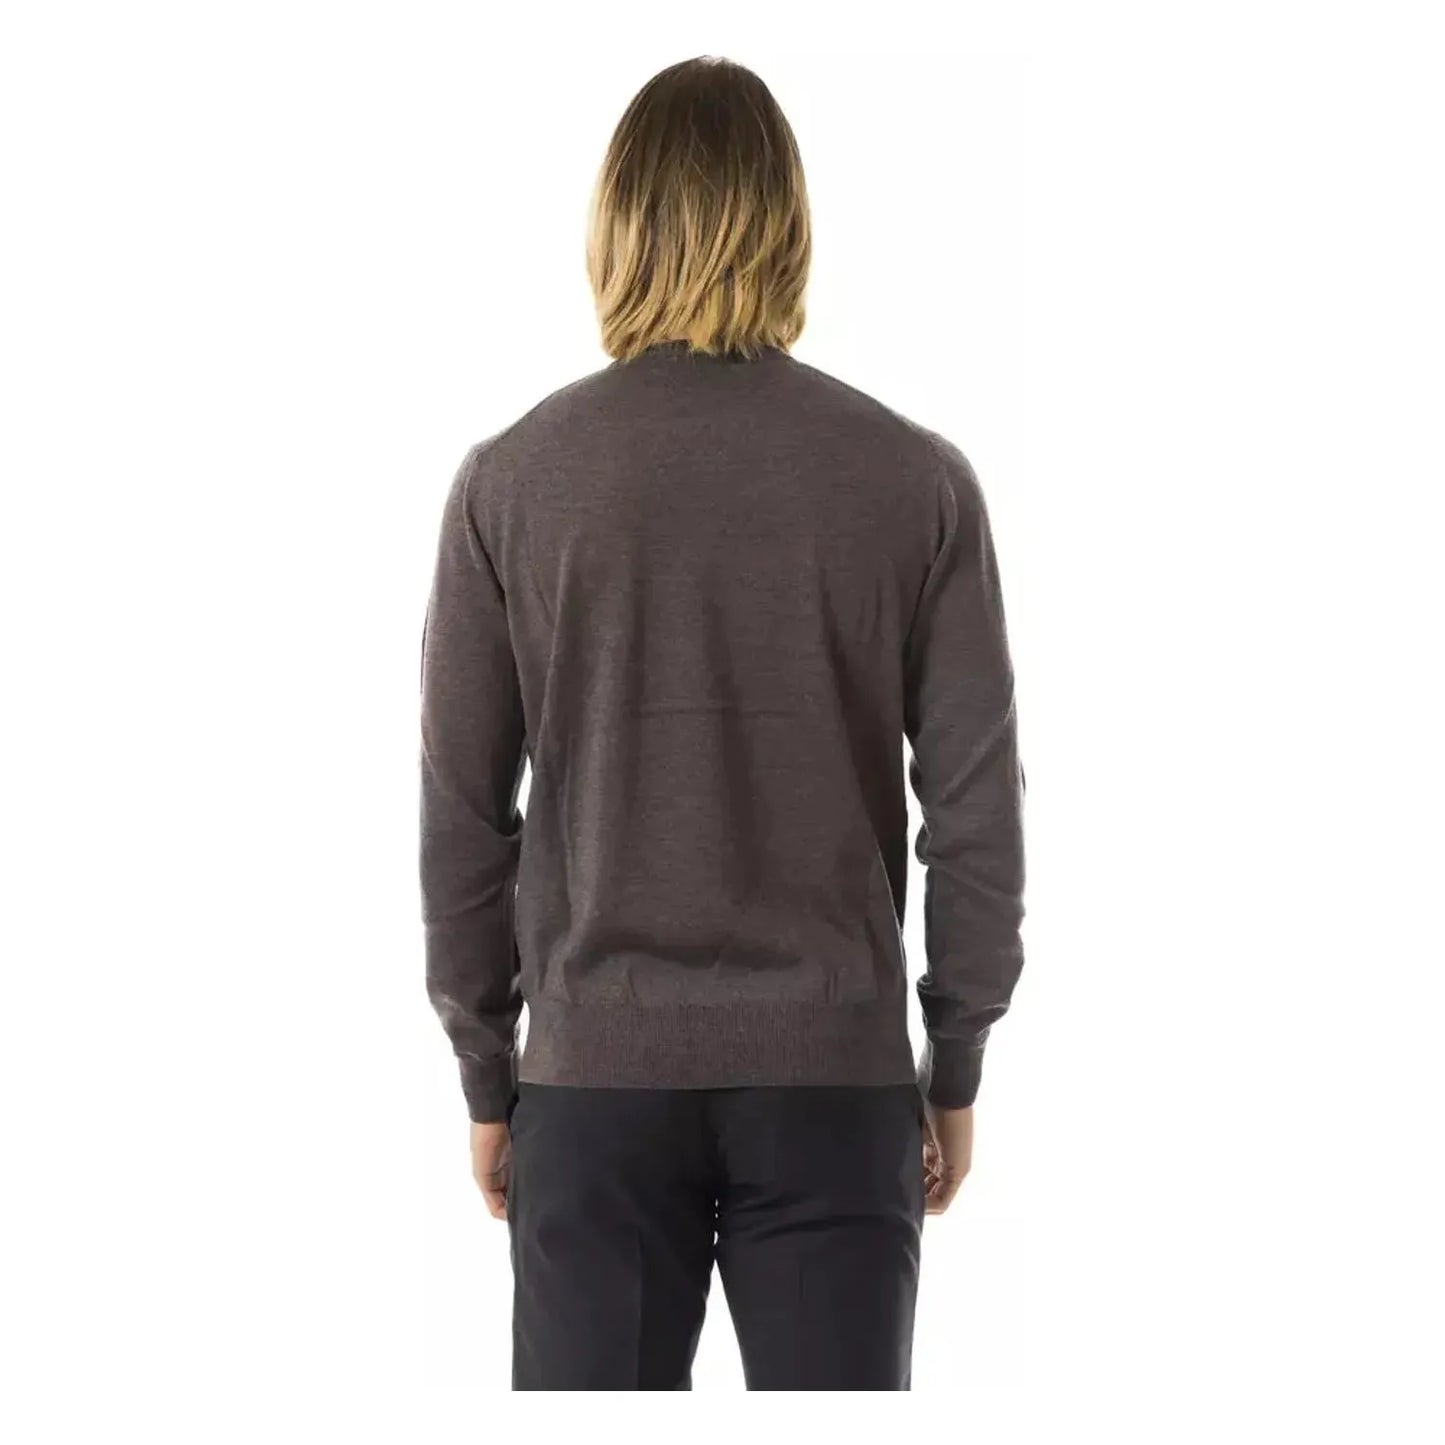 Uominitaliani Elegant Gray Merino Wool Crew Neck Sweater noce-sweater-1 stock_product_image_7818_1199649941-24-45d882ae-406.webp